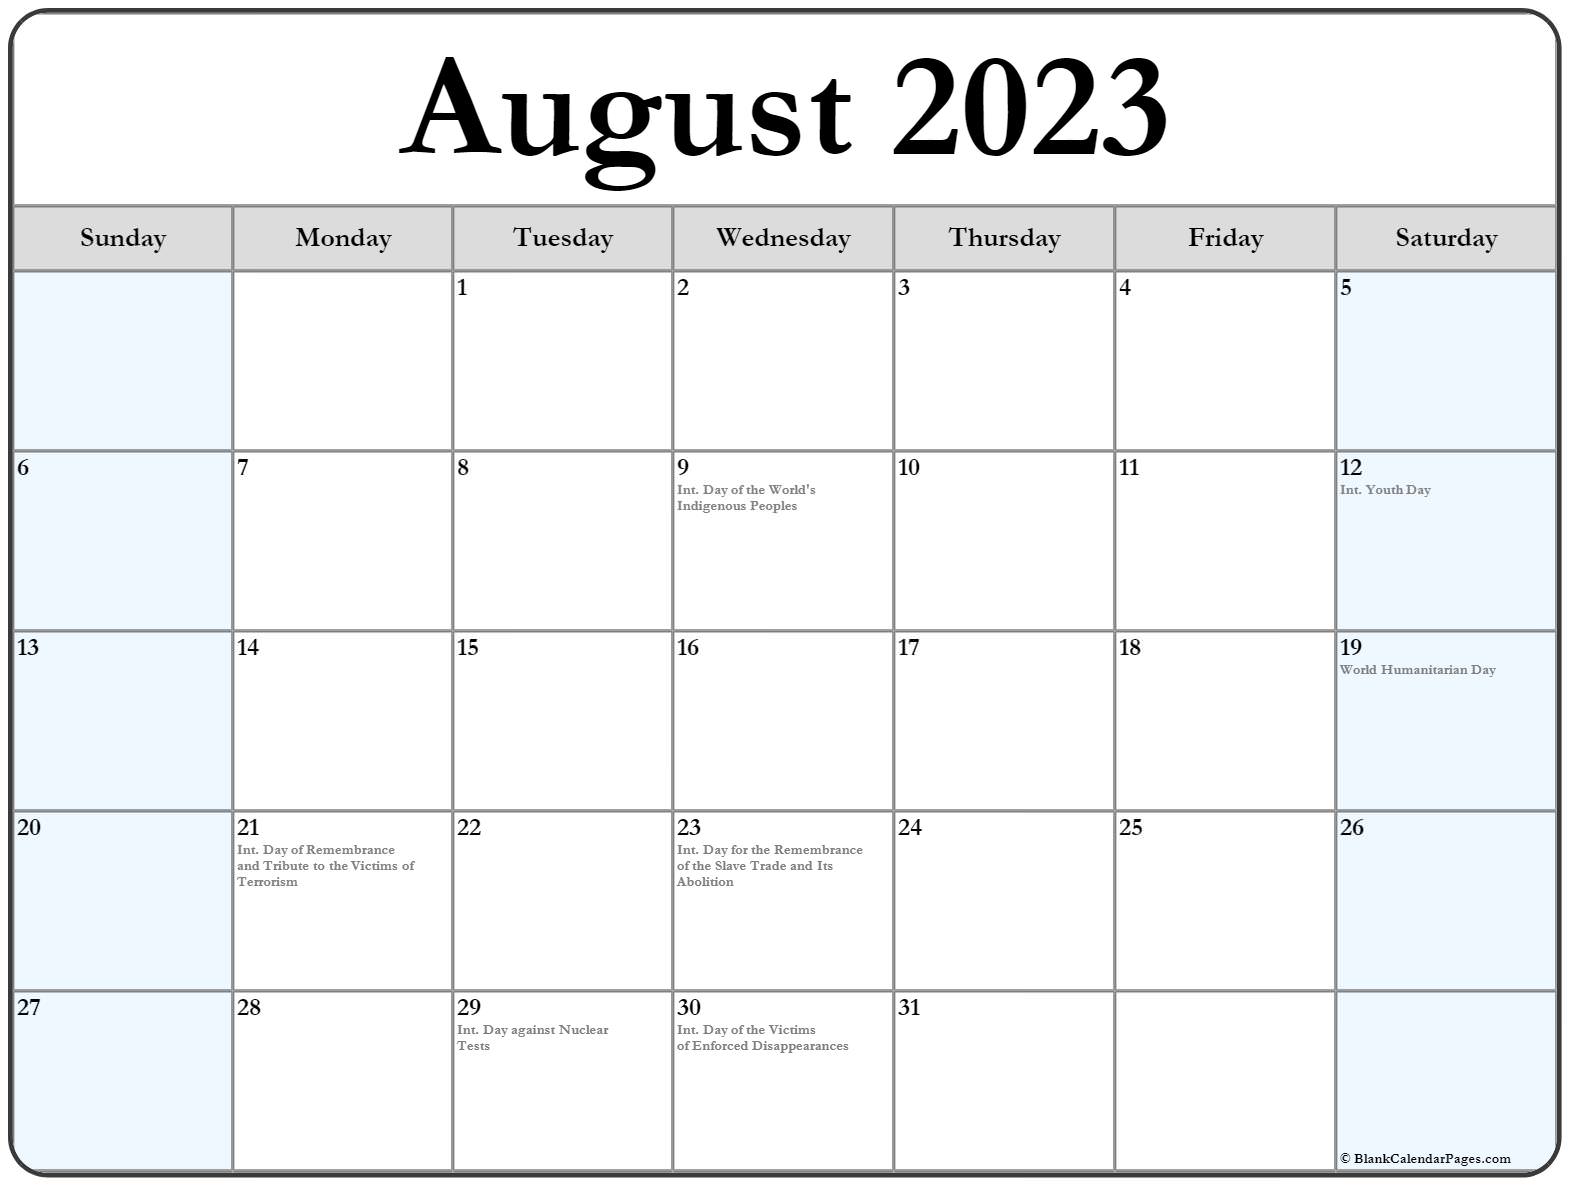 august-2023-calendar-free-printable-calendar-august-2023-calendar-of-the-month-free-printable